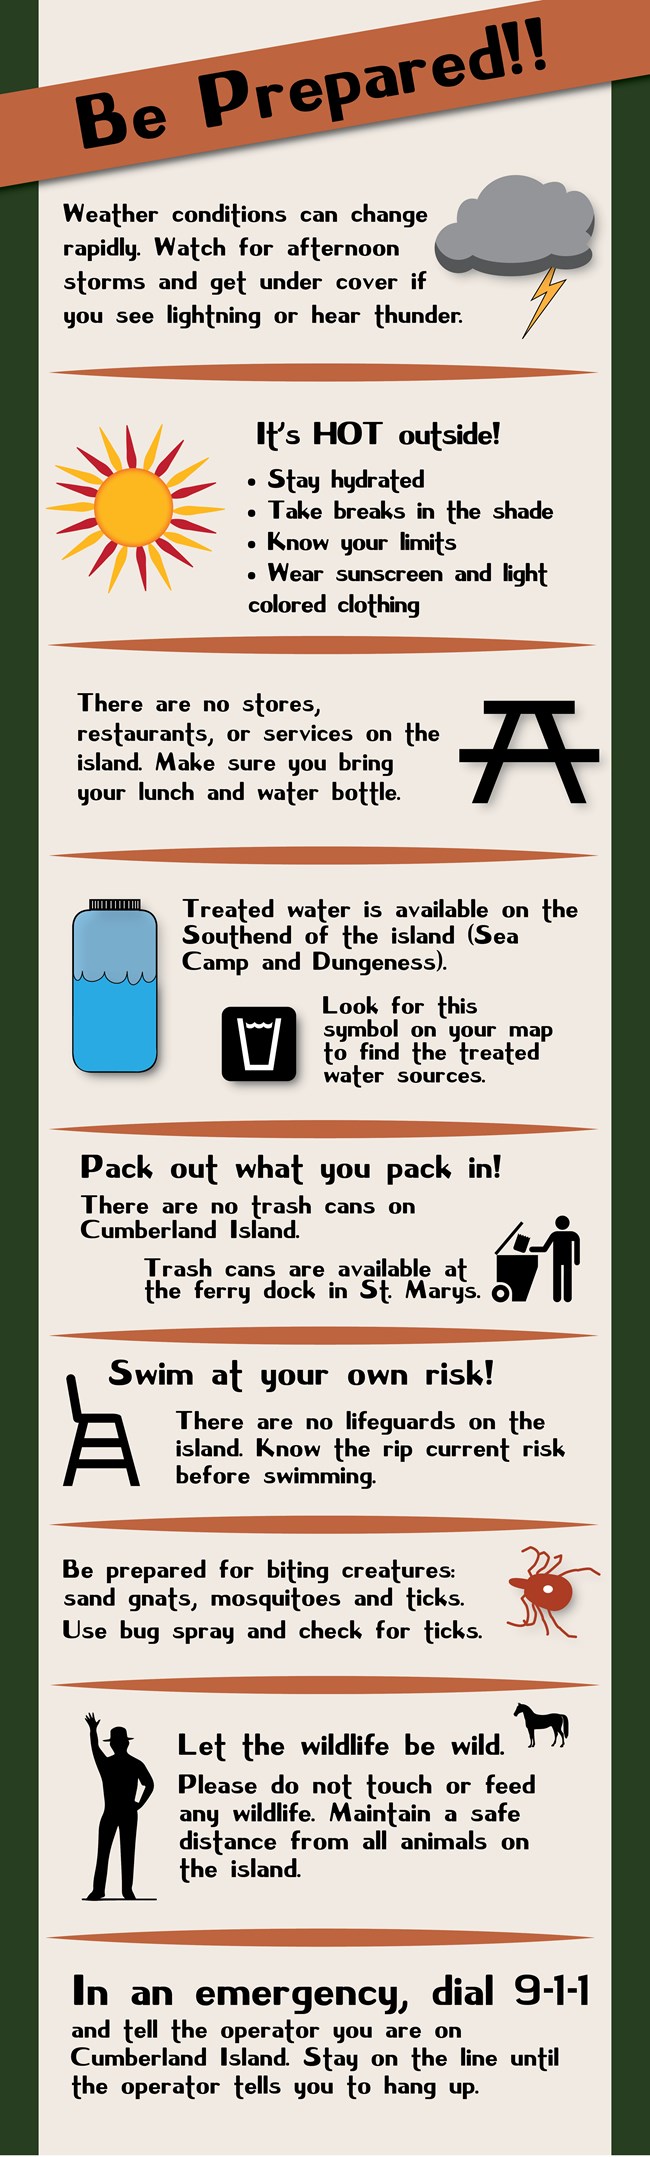 Island Safety Infographic, detailed text alternative below